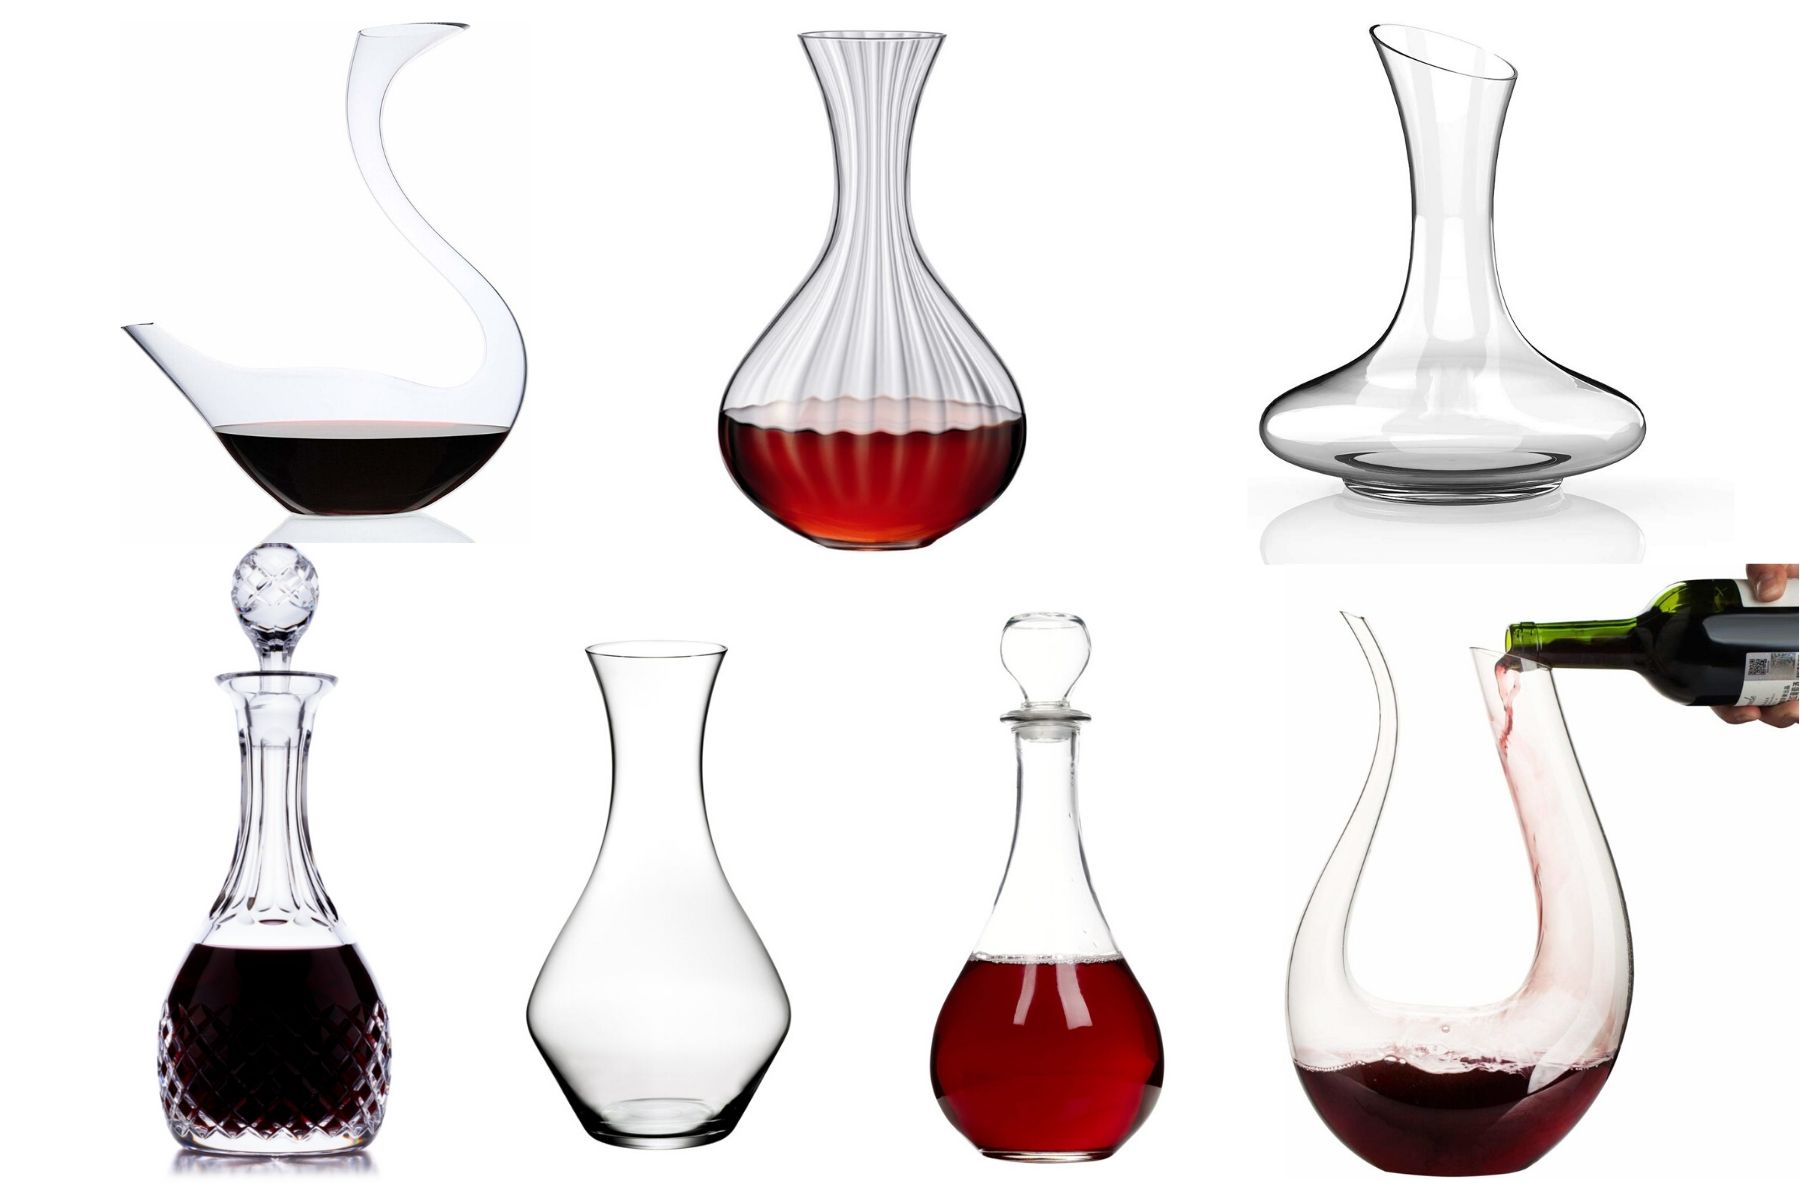 https://divino.wine/wp-content/uploads/2019/10/types-of-wine-decanters.jpg